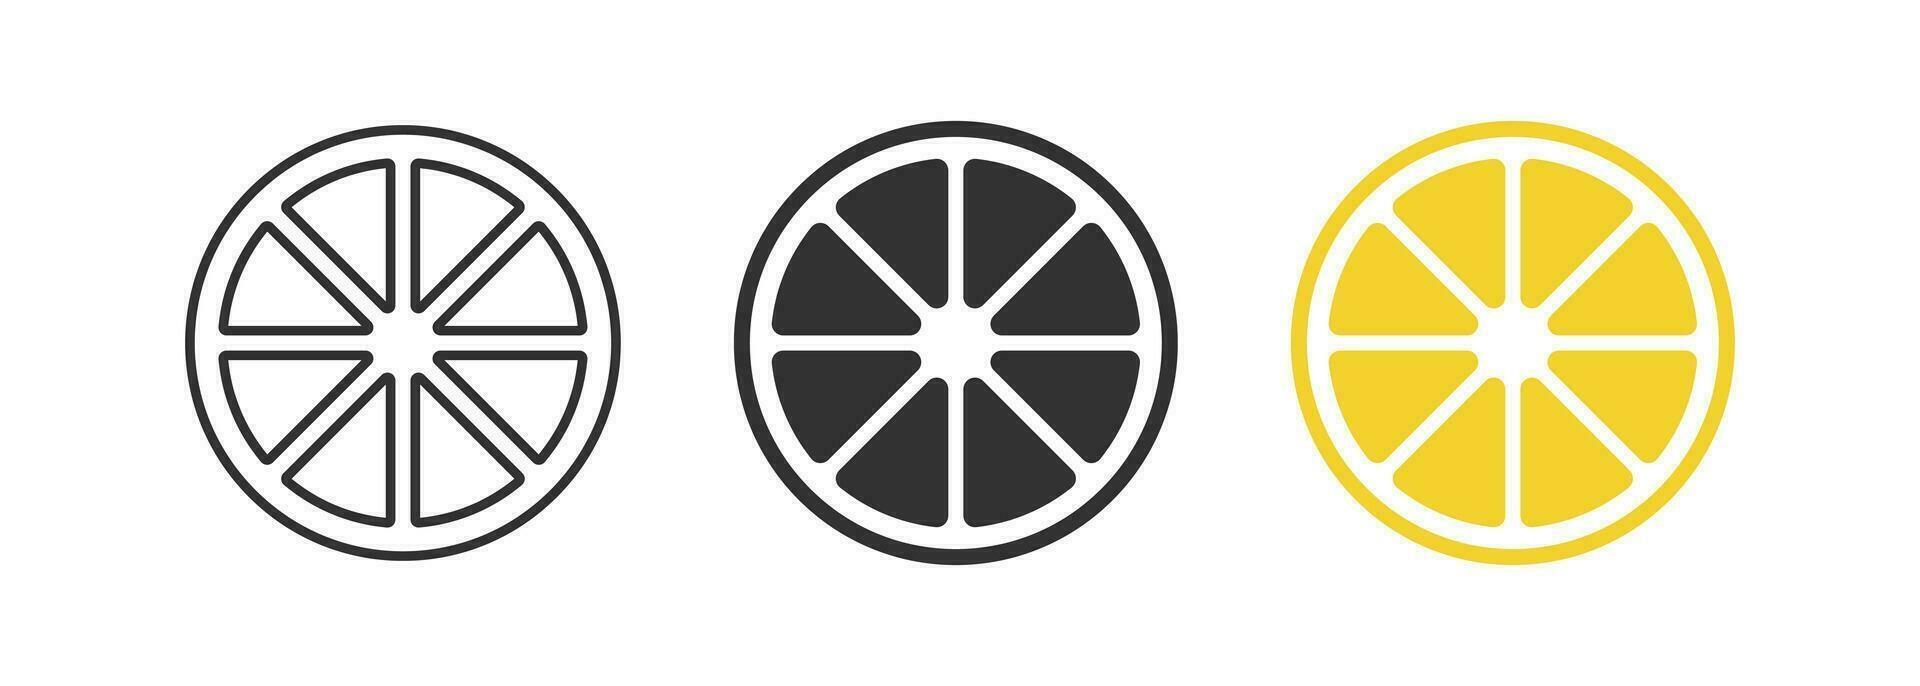 rebanada de limón icono. agrios señales. Lima símbolo. agrio Fruta simbolos pomelo iconos negro, naranja color. vector signo.